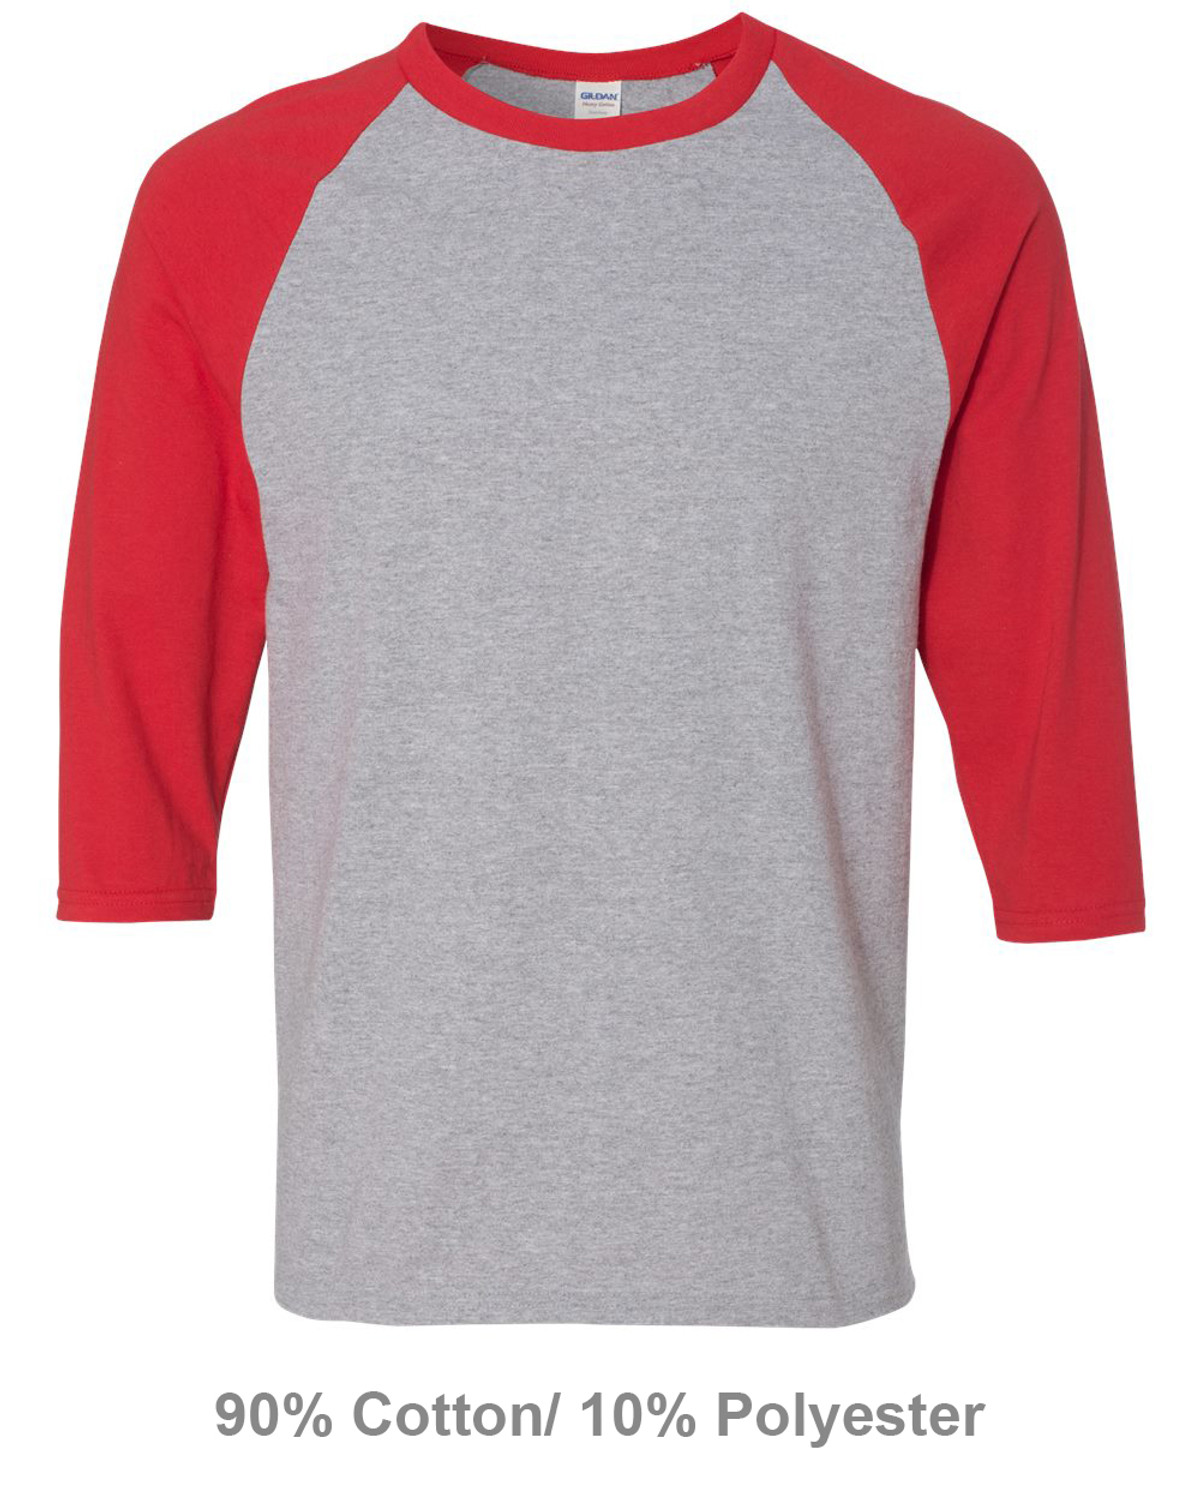 Men's Full Length Sleeve Raglan Cotton Baseball Tee Shirt, Black